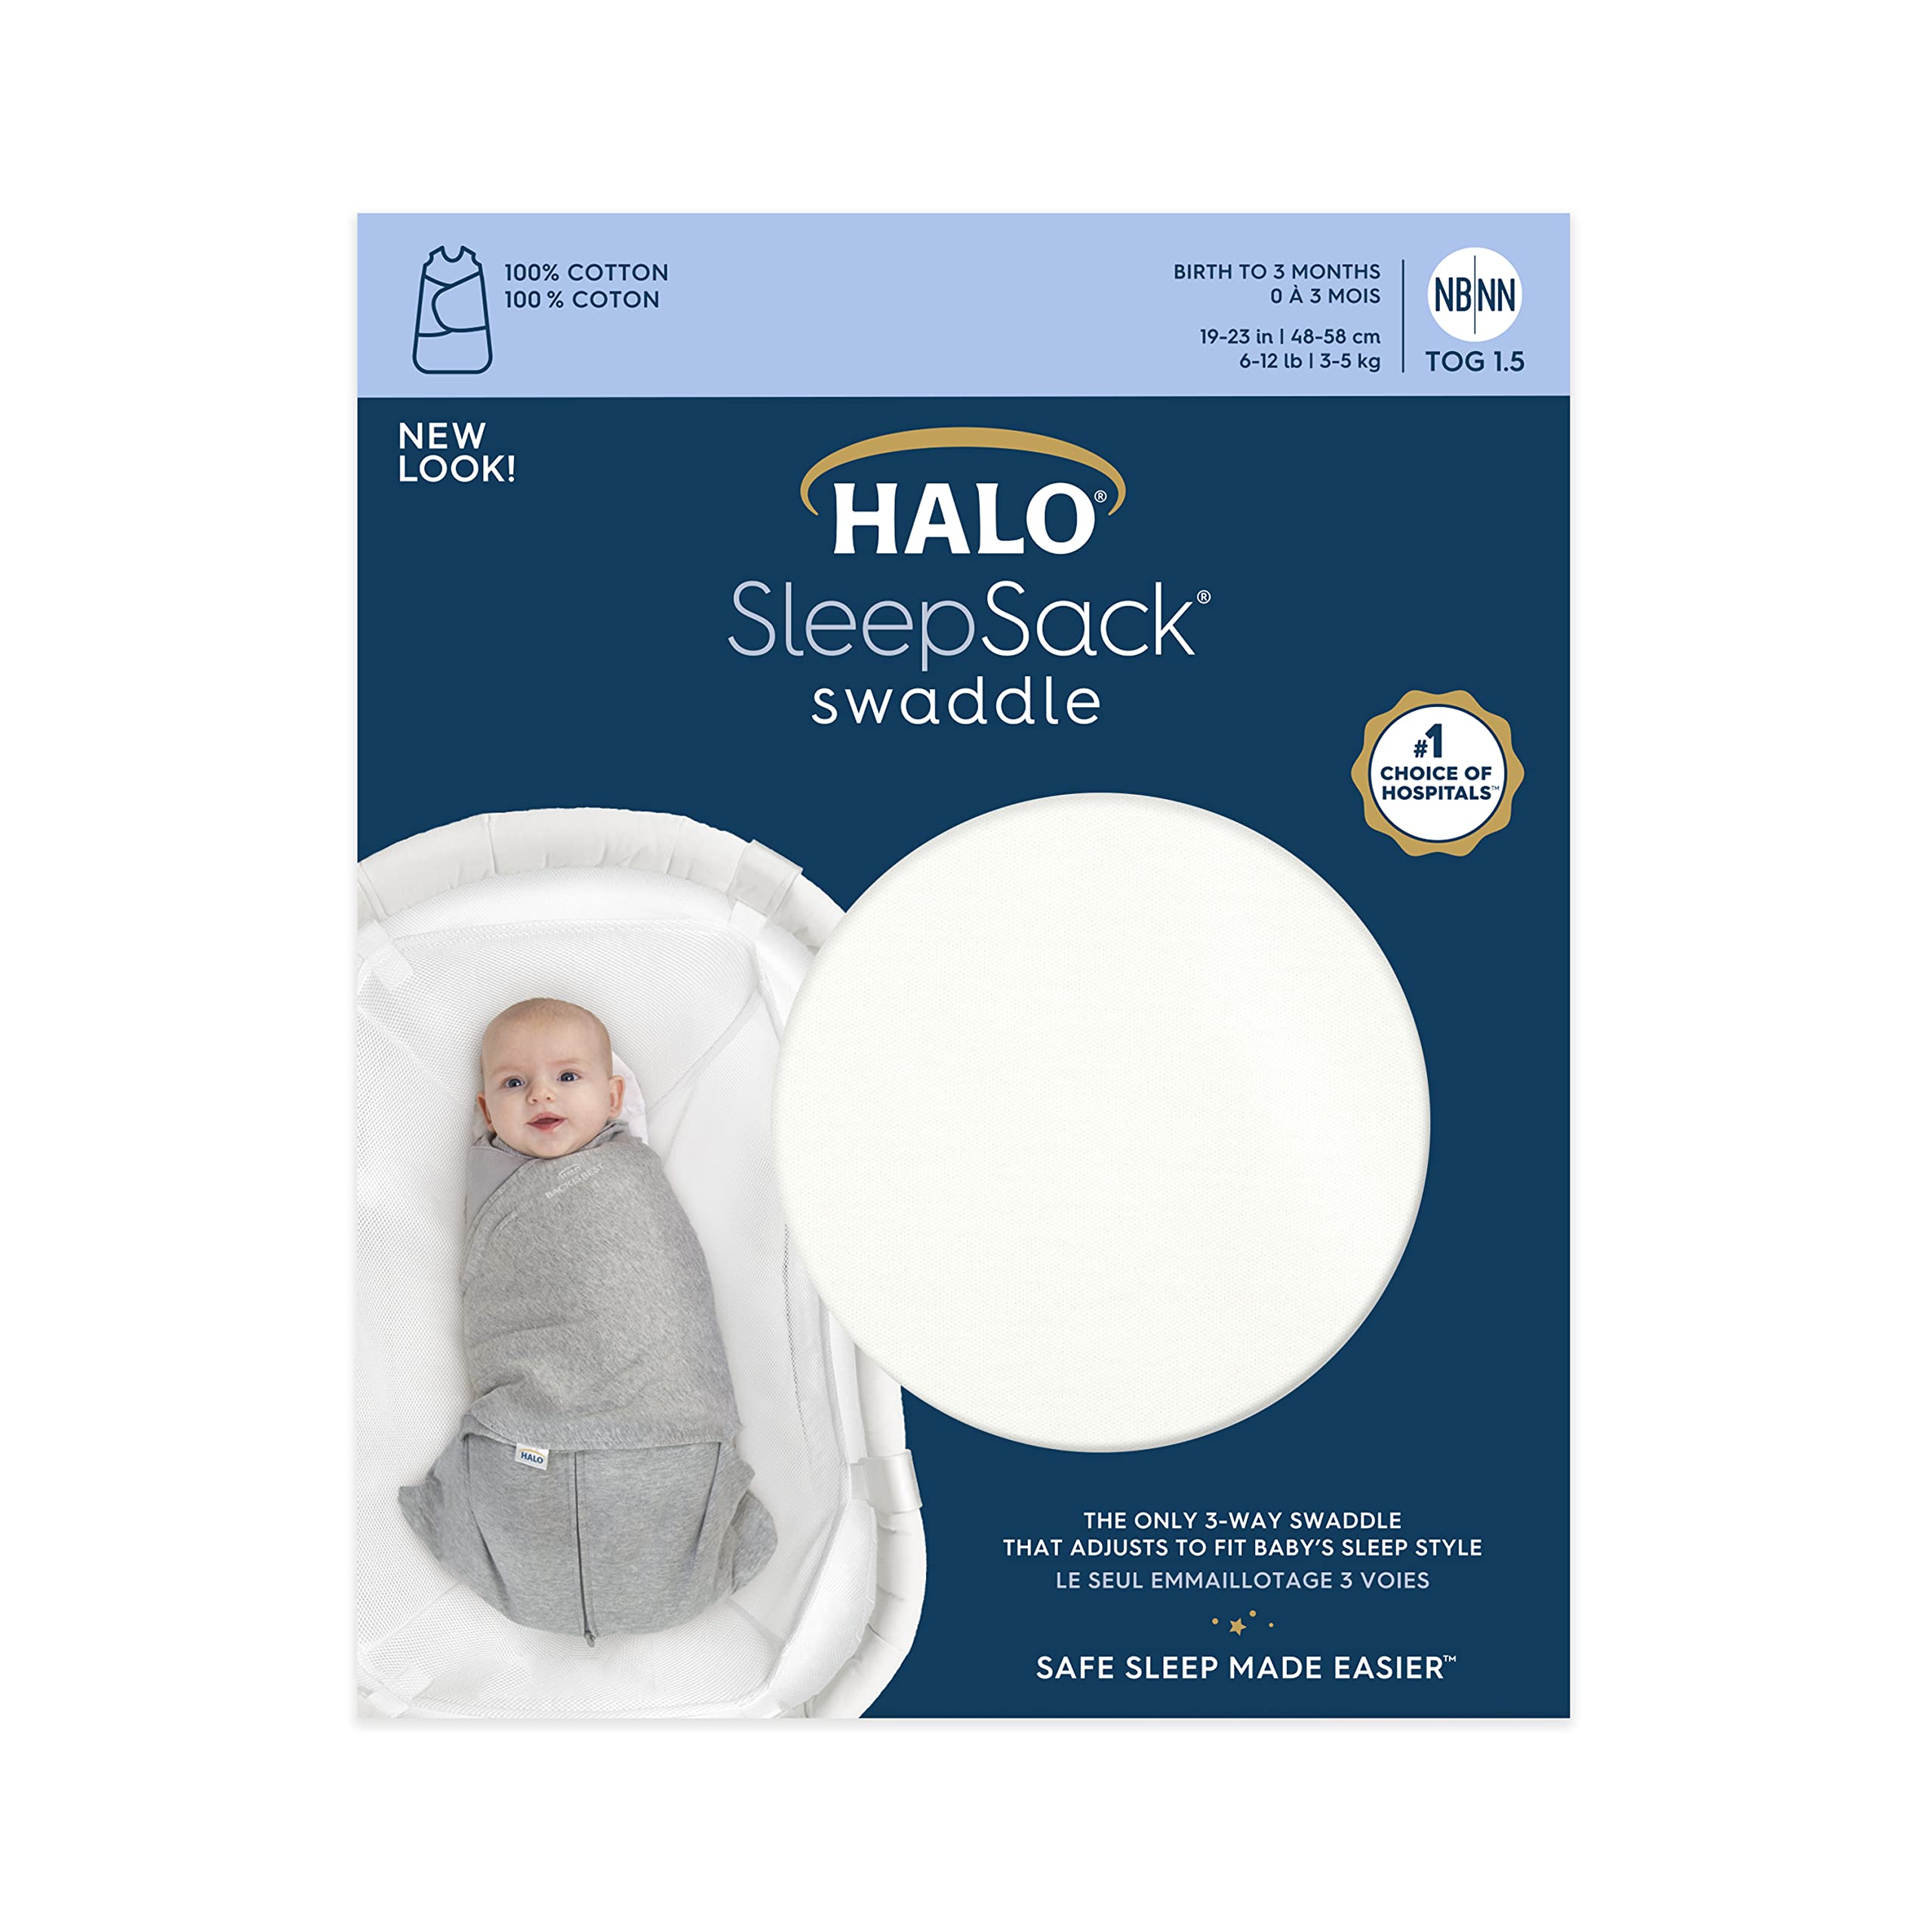 HALO 100% Cotton Sleepsack Swaddle, 3-Way Adjustable Wearable Blanket, TOG 1.5, Natural, Newborn, 0-3 Months